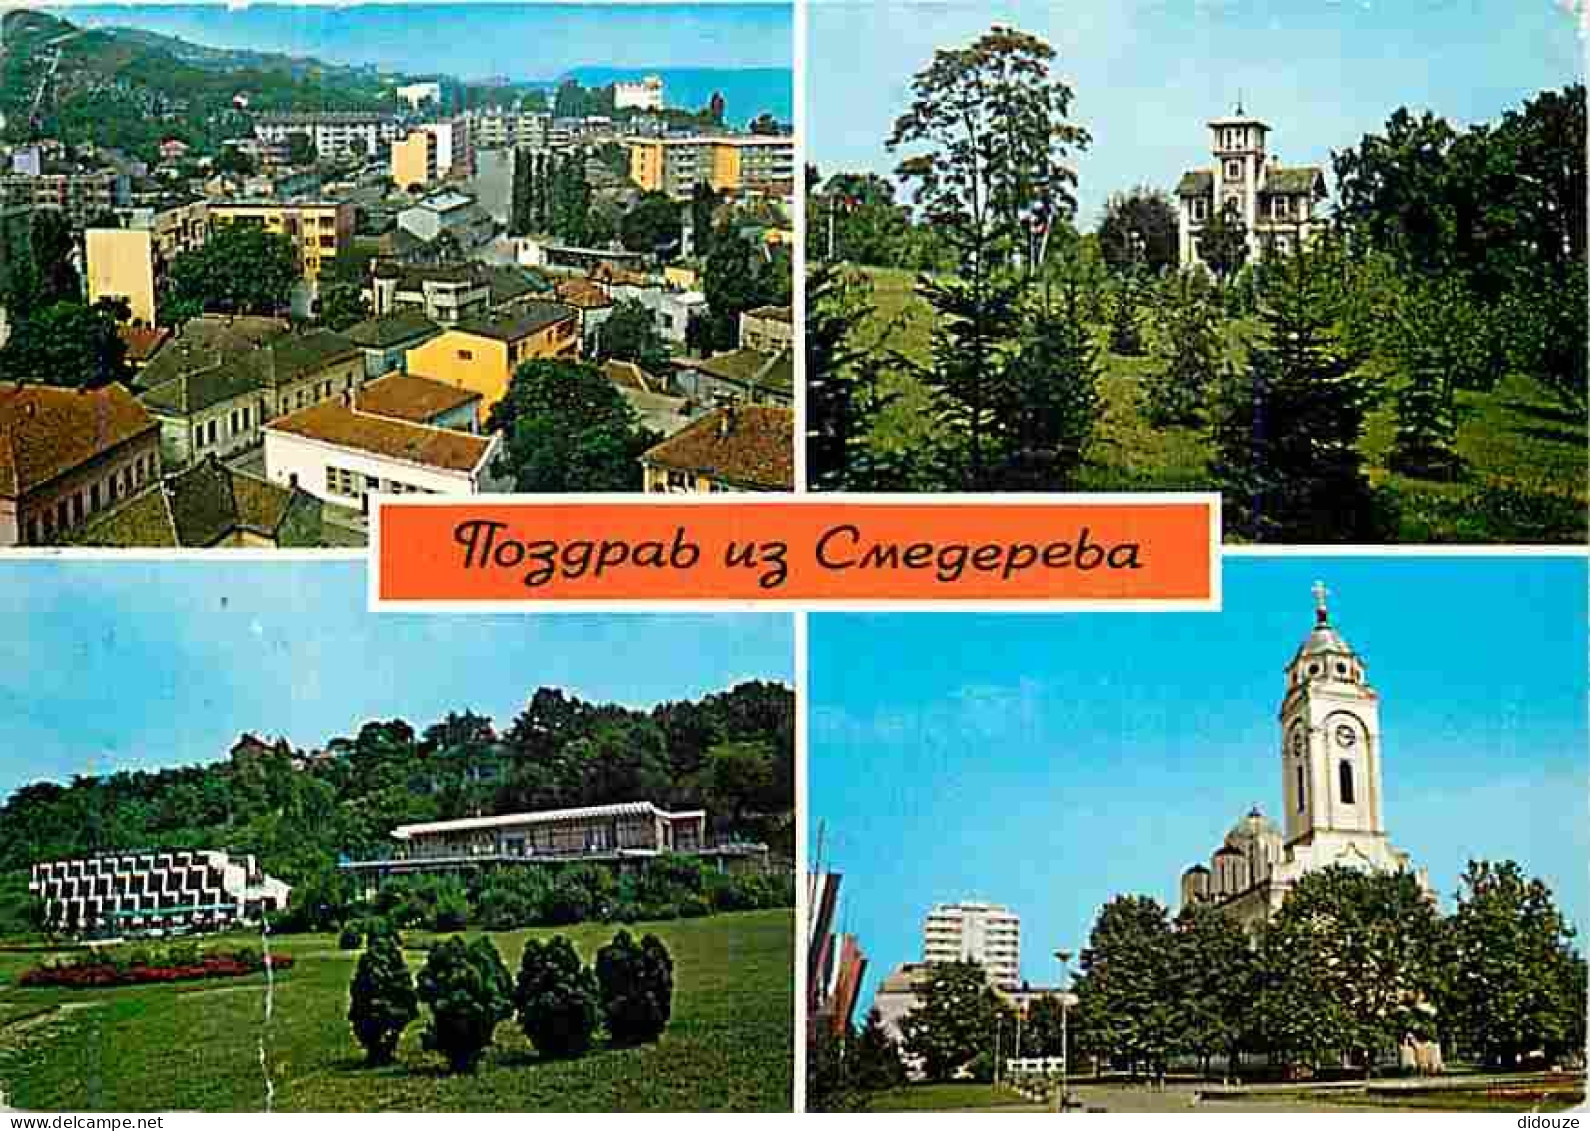 Yougoslavie - Zagreb - Multivues - CPM - Voir Scans Recto-Verso - Yougoslavie